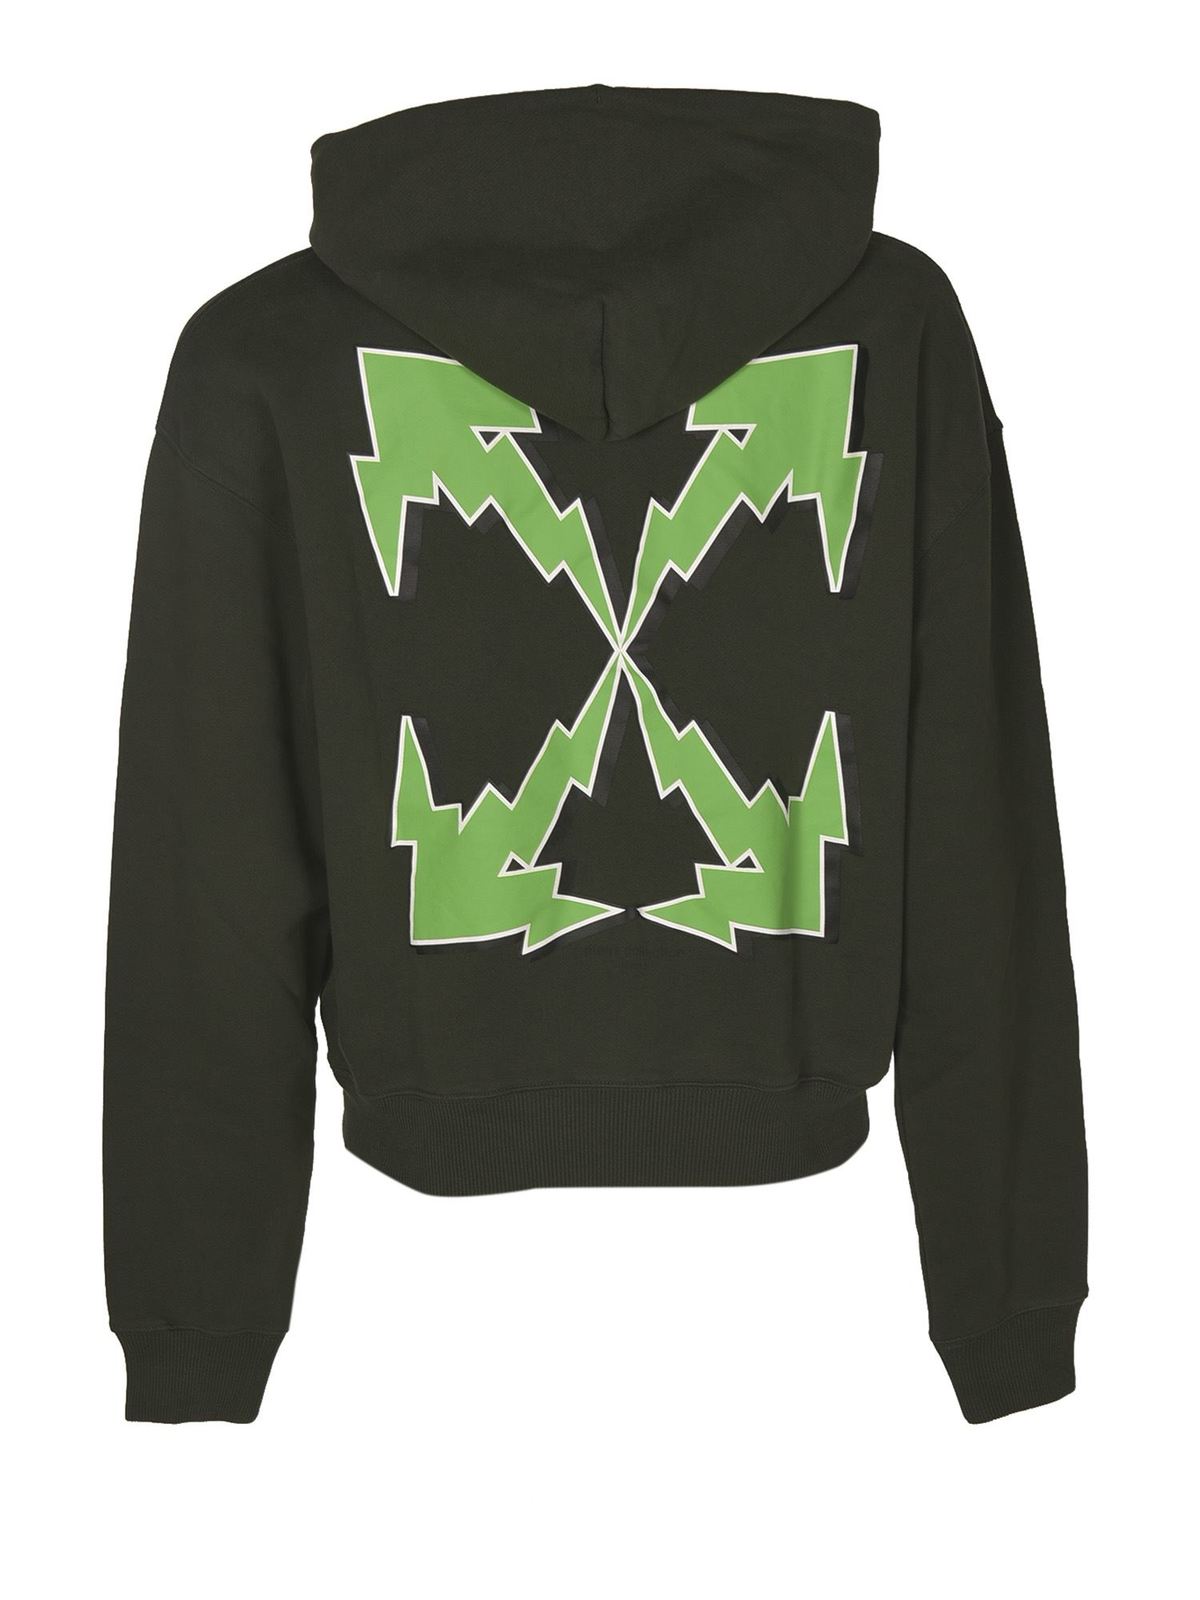 Bolt Arrow hoodie in army green